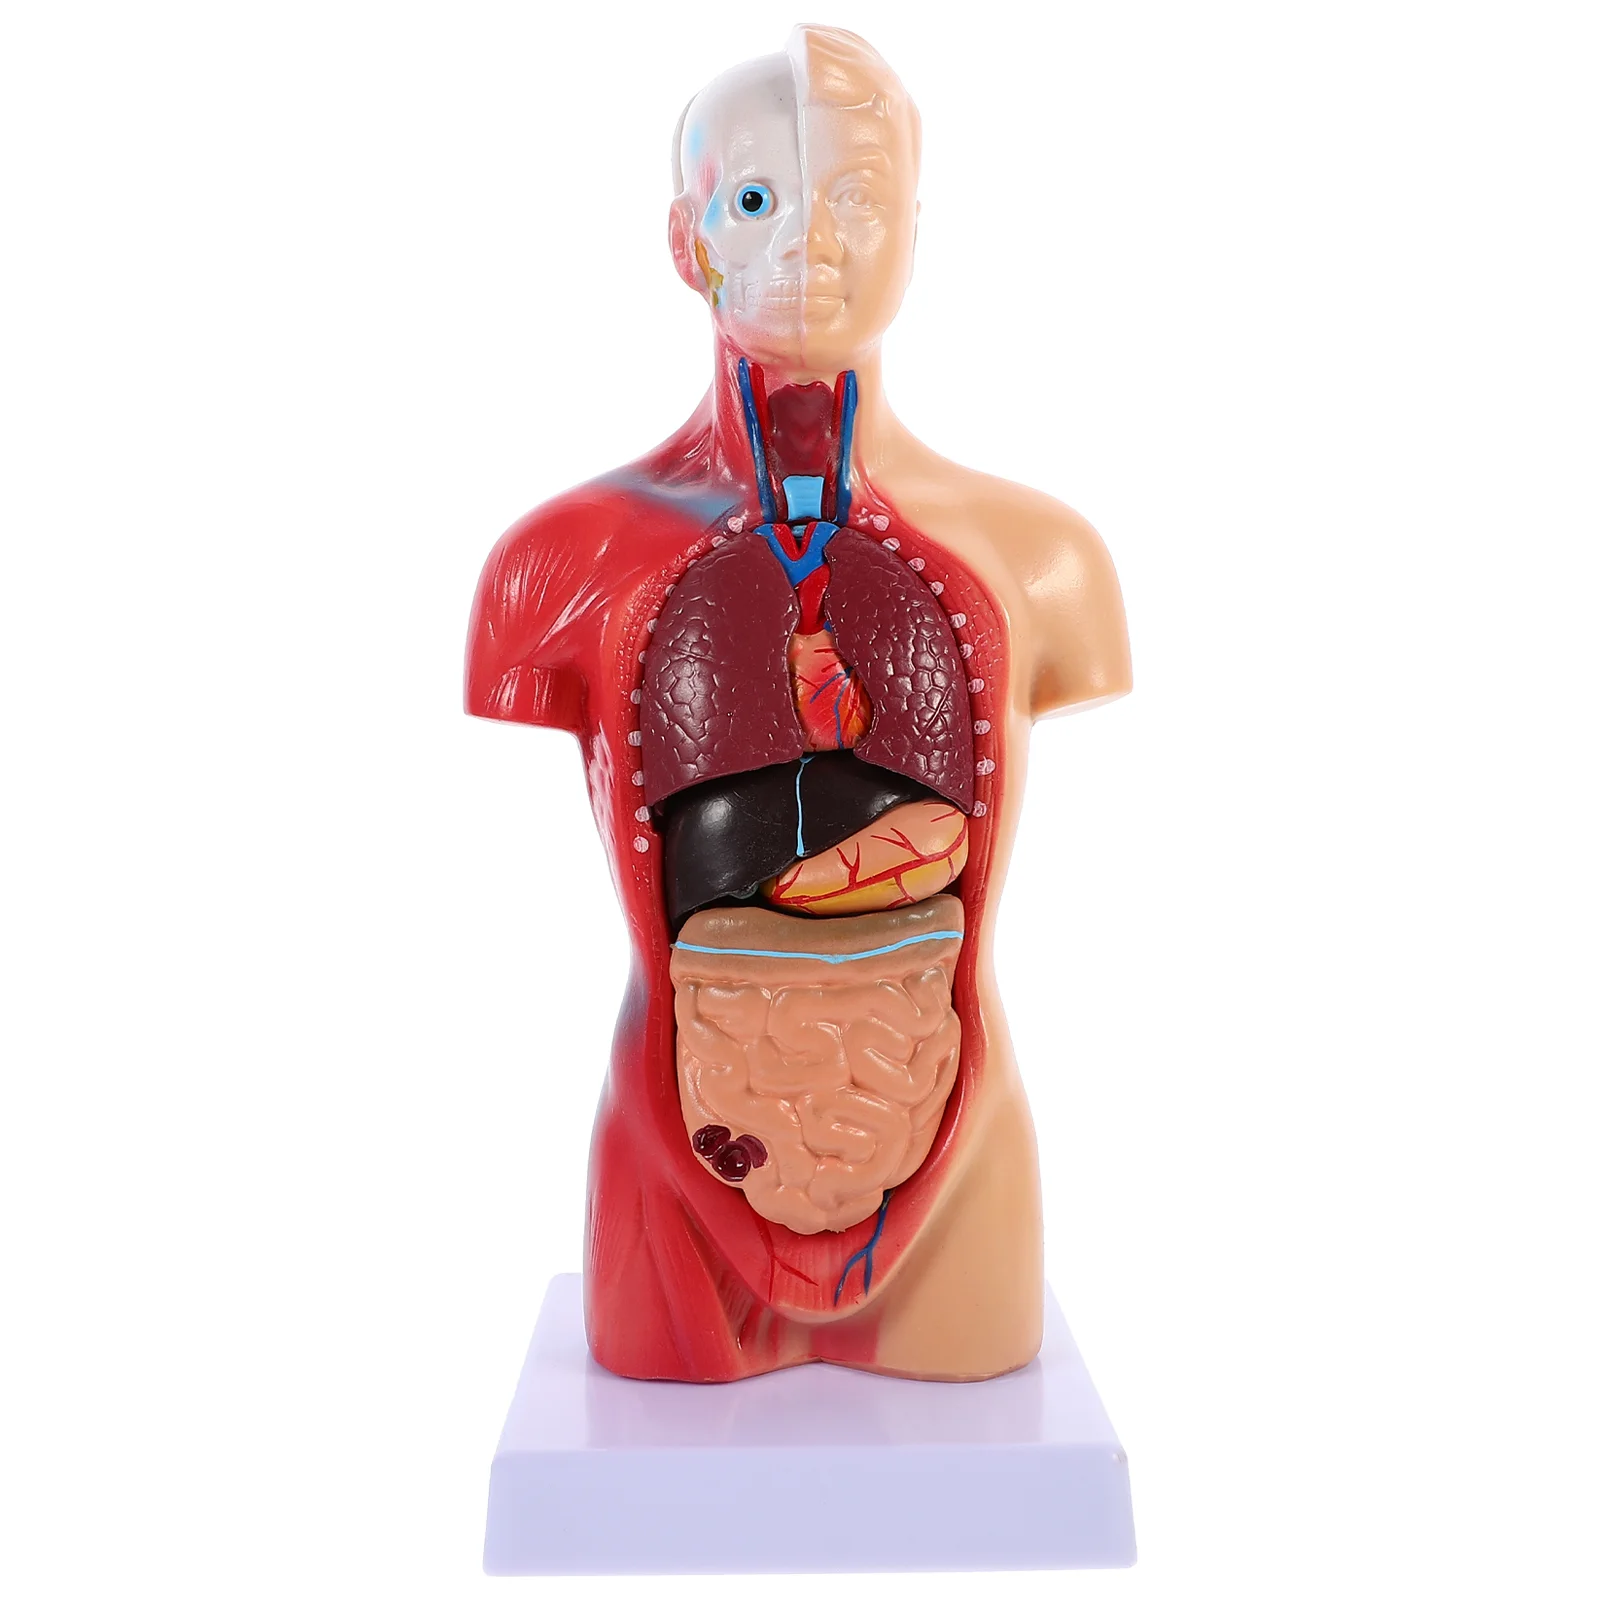 

Mannequin Anatomy Model Anatomical Teaching Manikin Tool Torso Organs Pvc Human Body Child Childrens Toys Medical